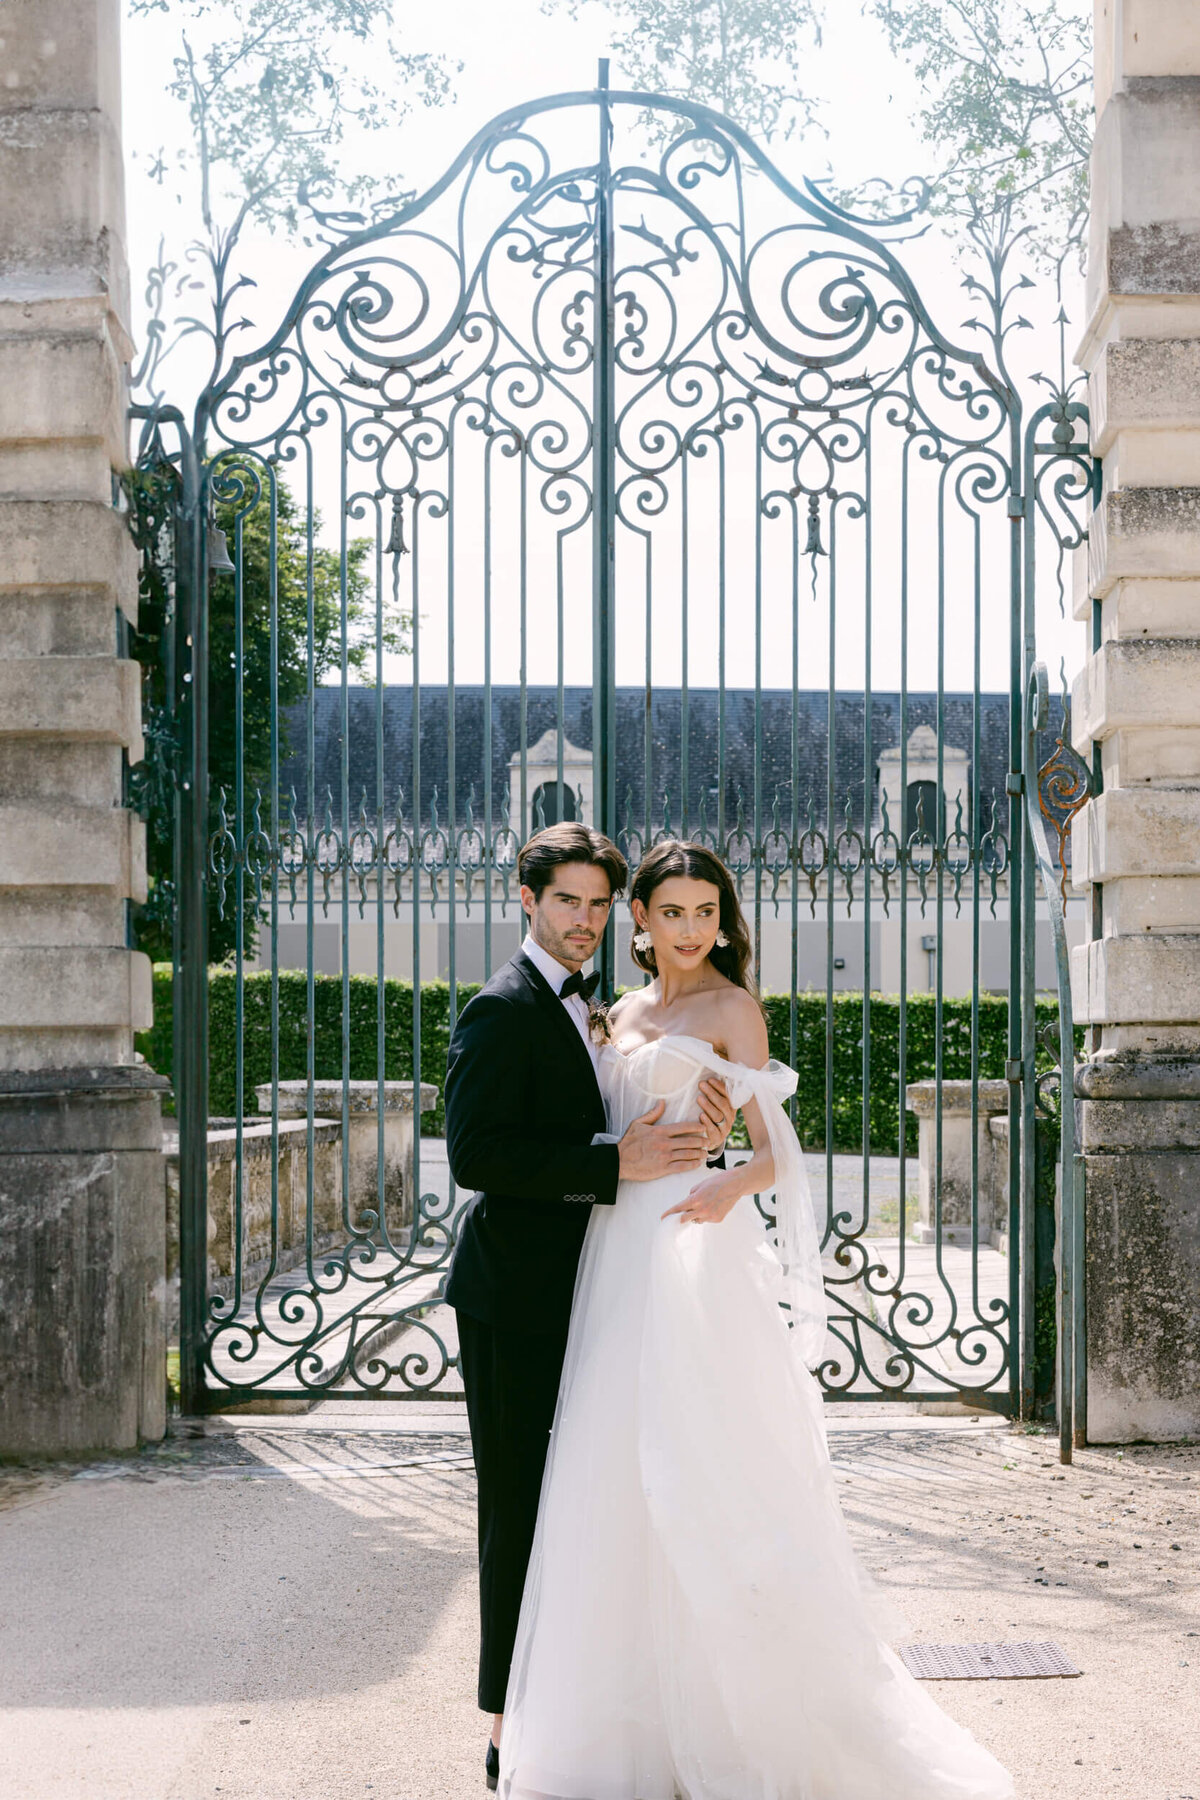 Jayce-Keil-Photo-Film-london-paris-ireland-wedding-photography-76